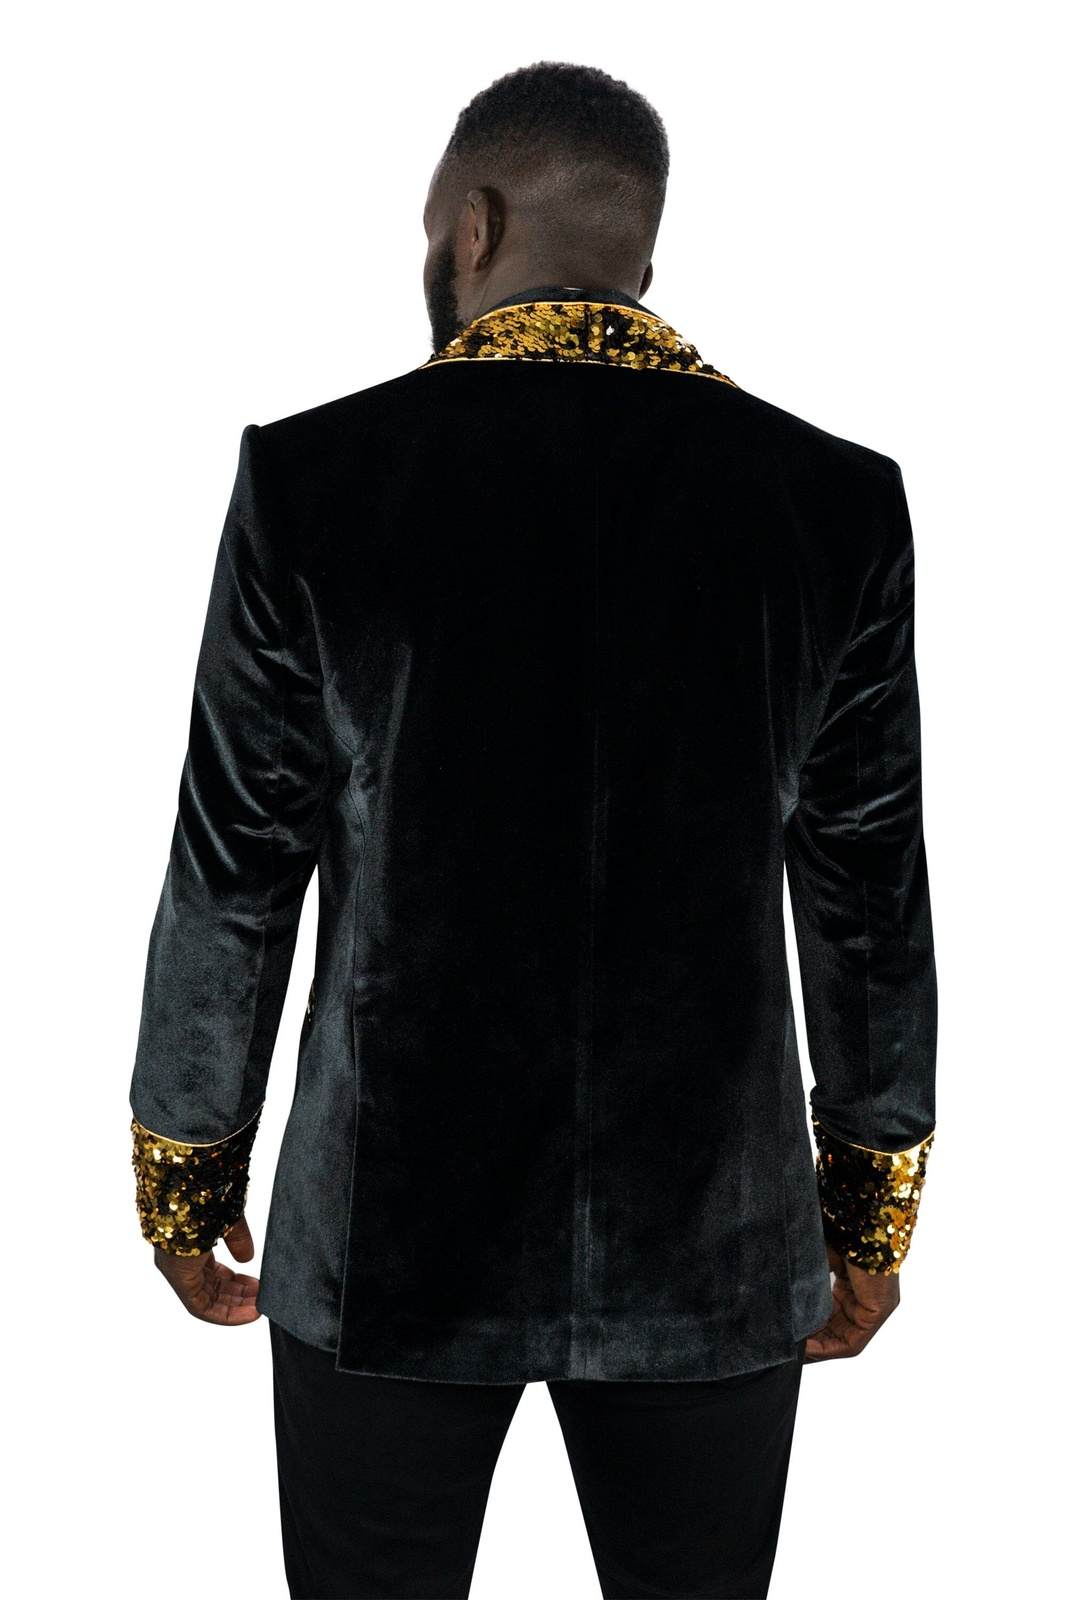 Mens Black Velvet Smoking Jacket with Gold Sequins by Love Khaos Festival Jacket brand.